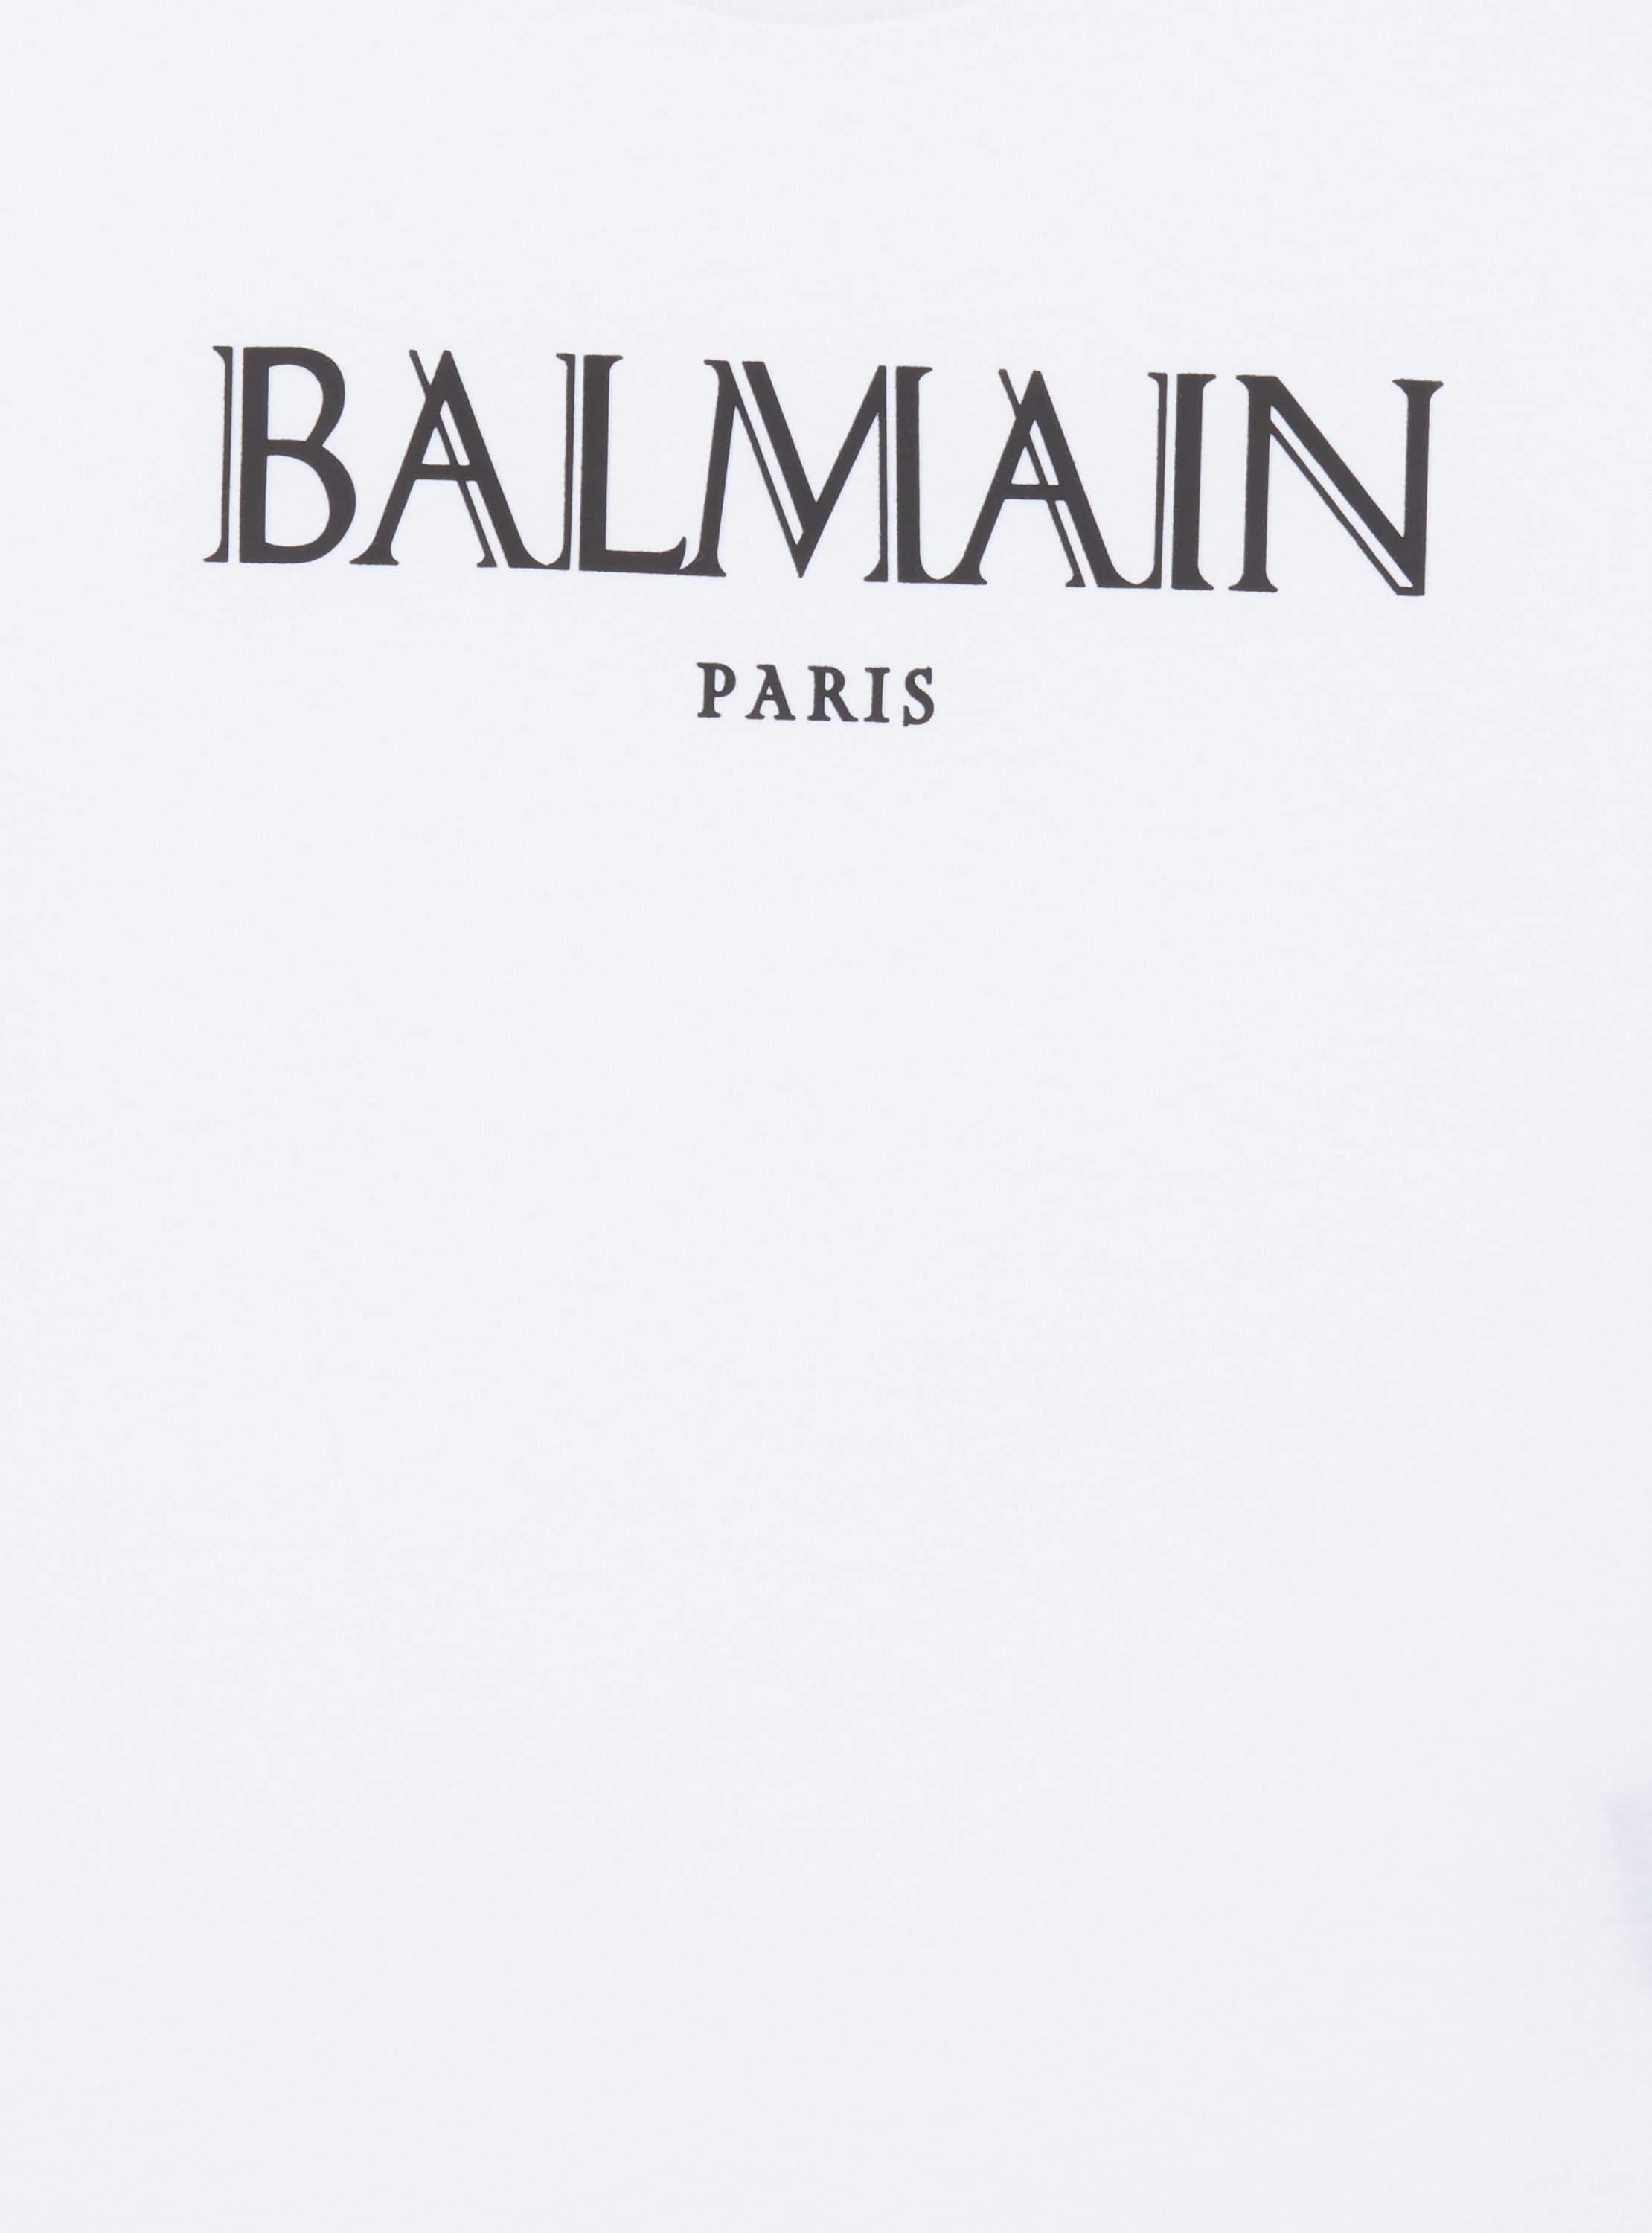 Balmain Romain 티셔츠